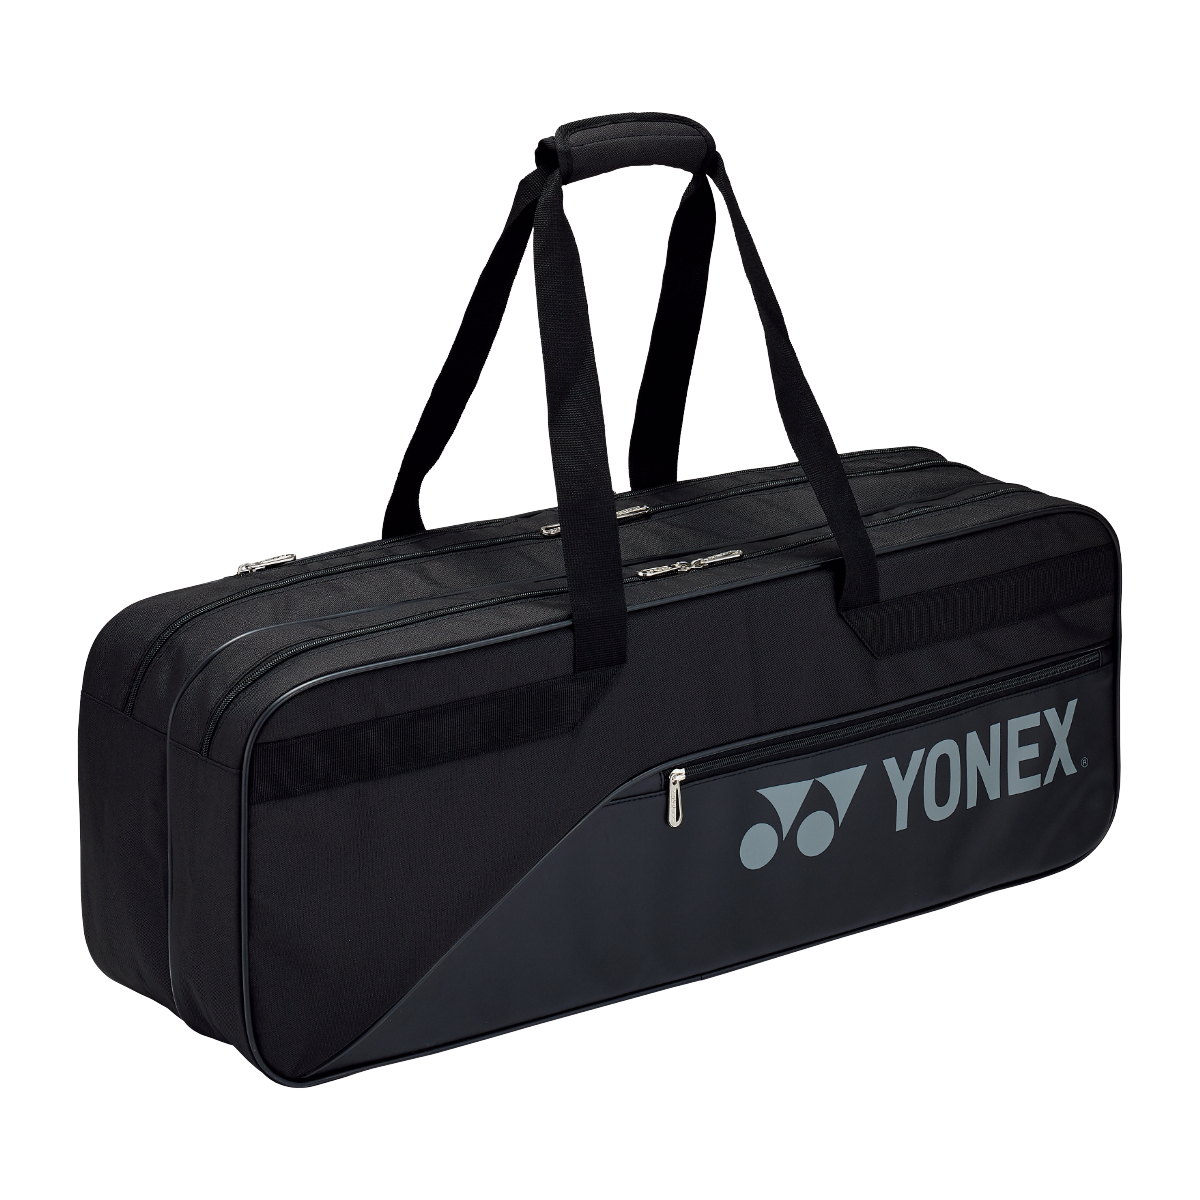 YONEX ACTIVE 2WAY TOURNAMENT BAG TALIANOS SPORTS